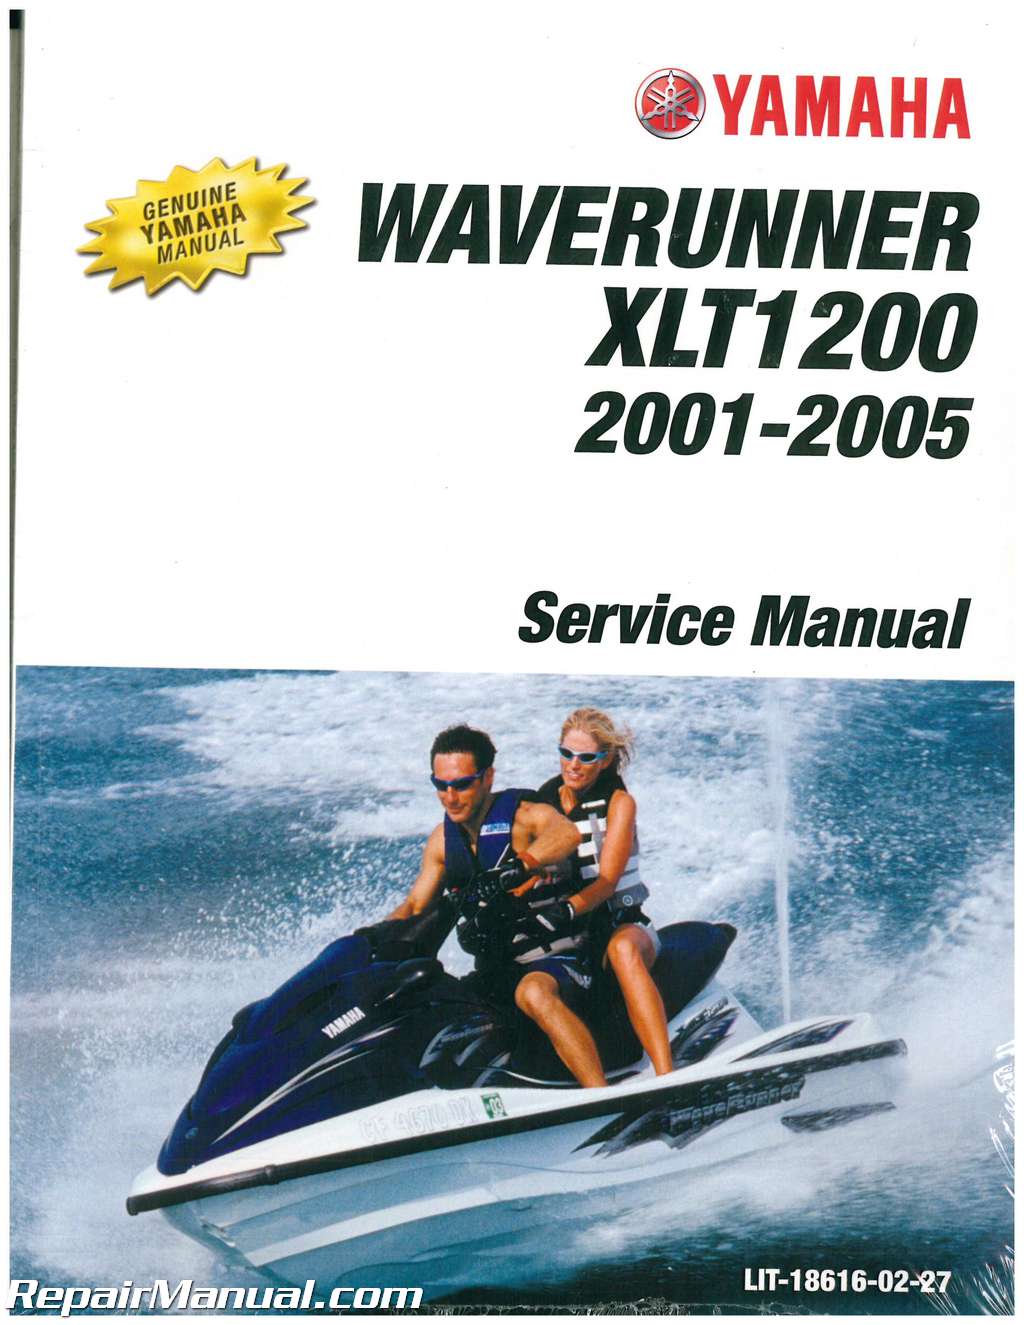 2001-2005 Yamaha XLT1200 Waverunner Service Manual